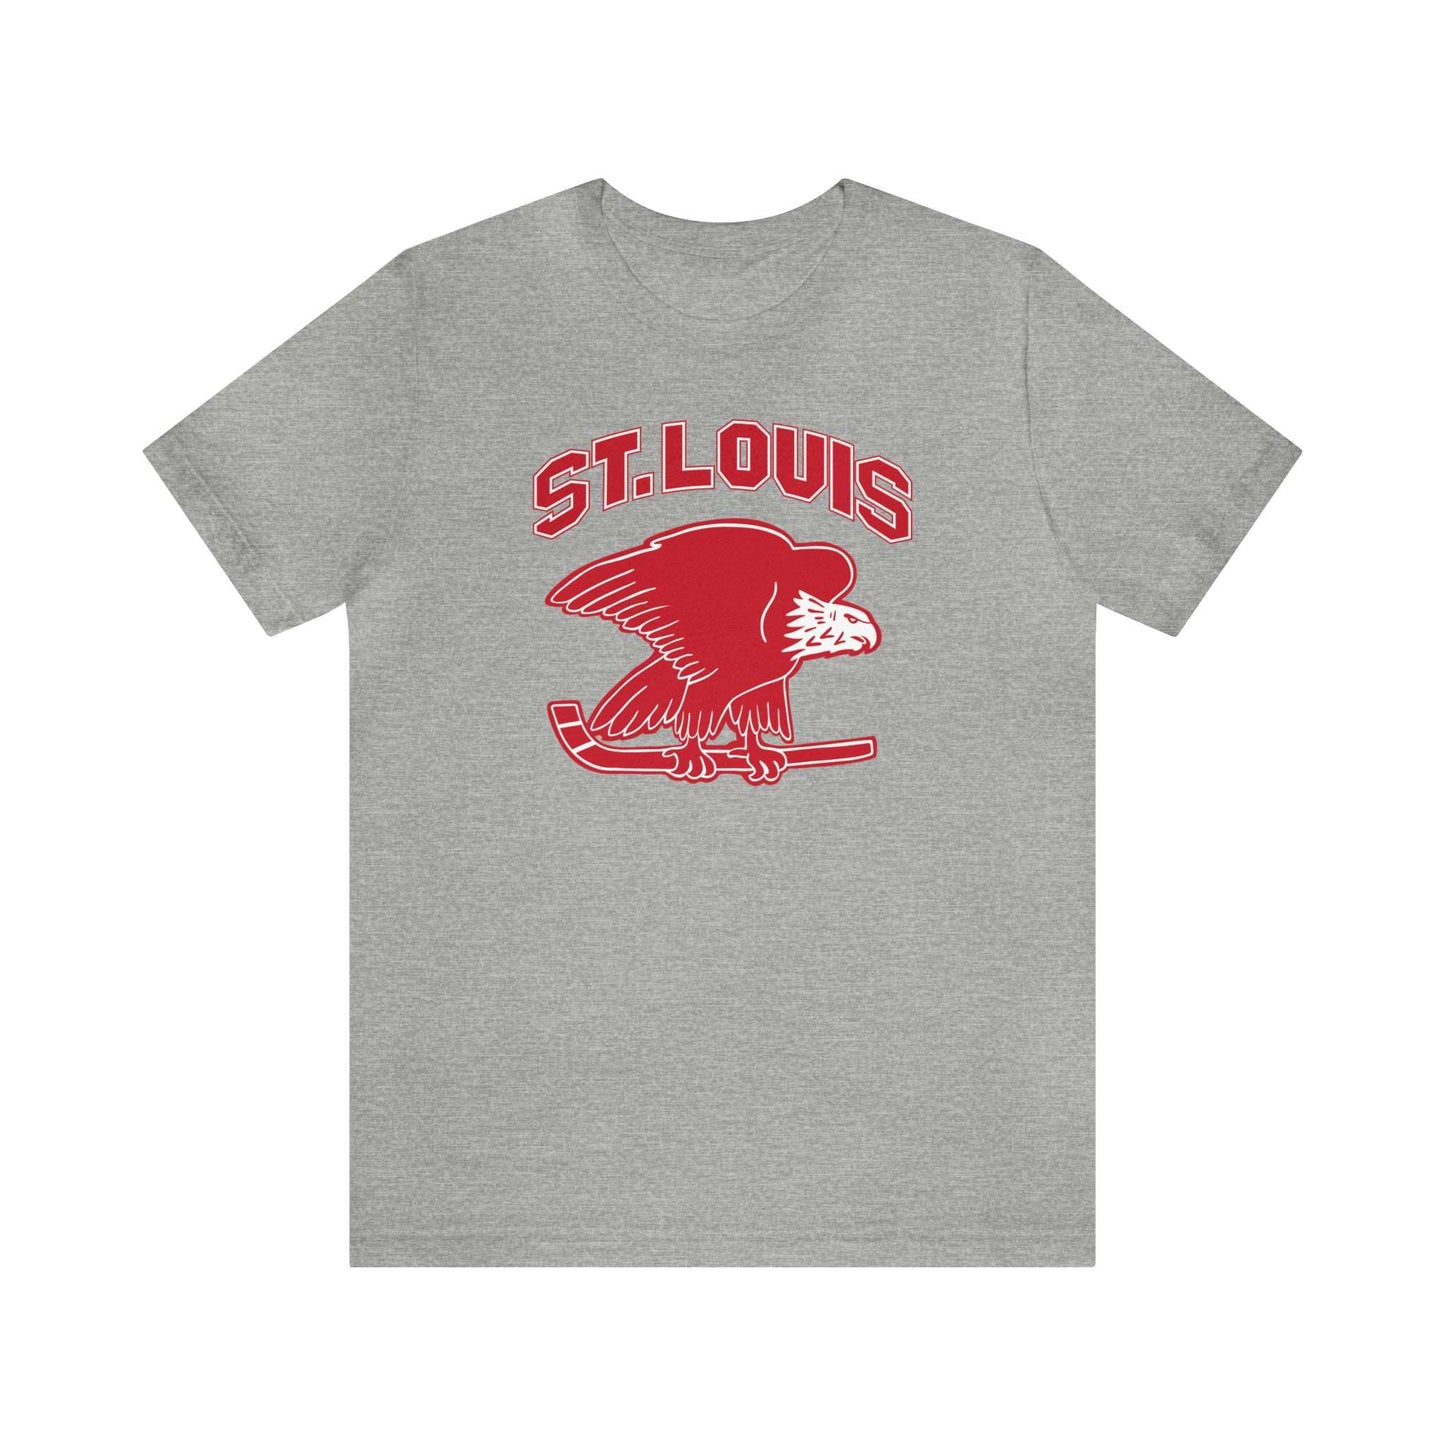 St. Louis Eagles Tee